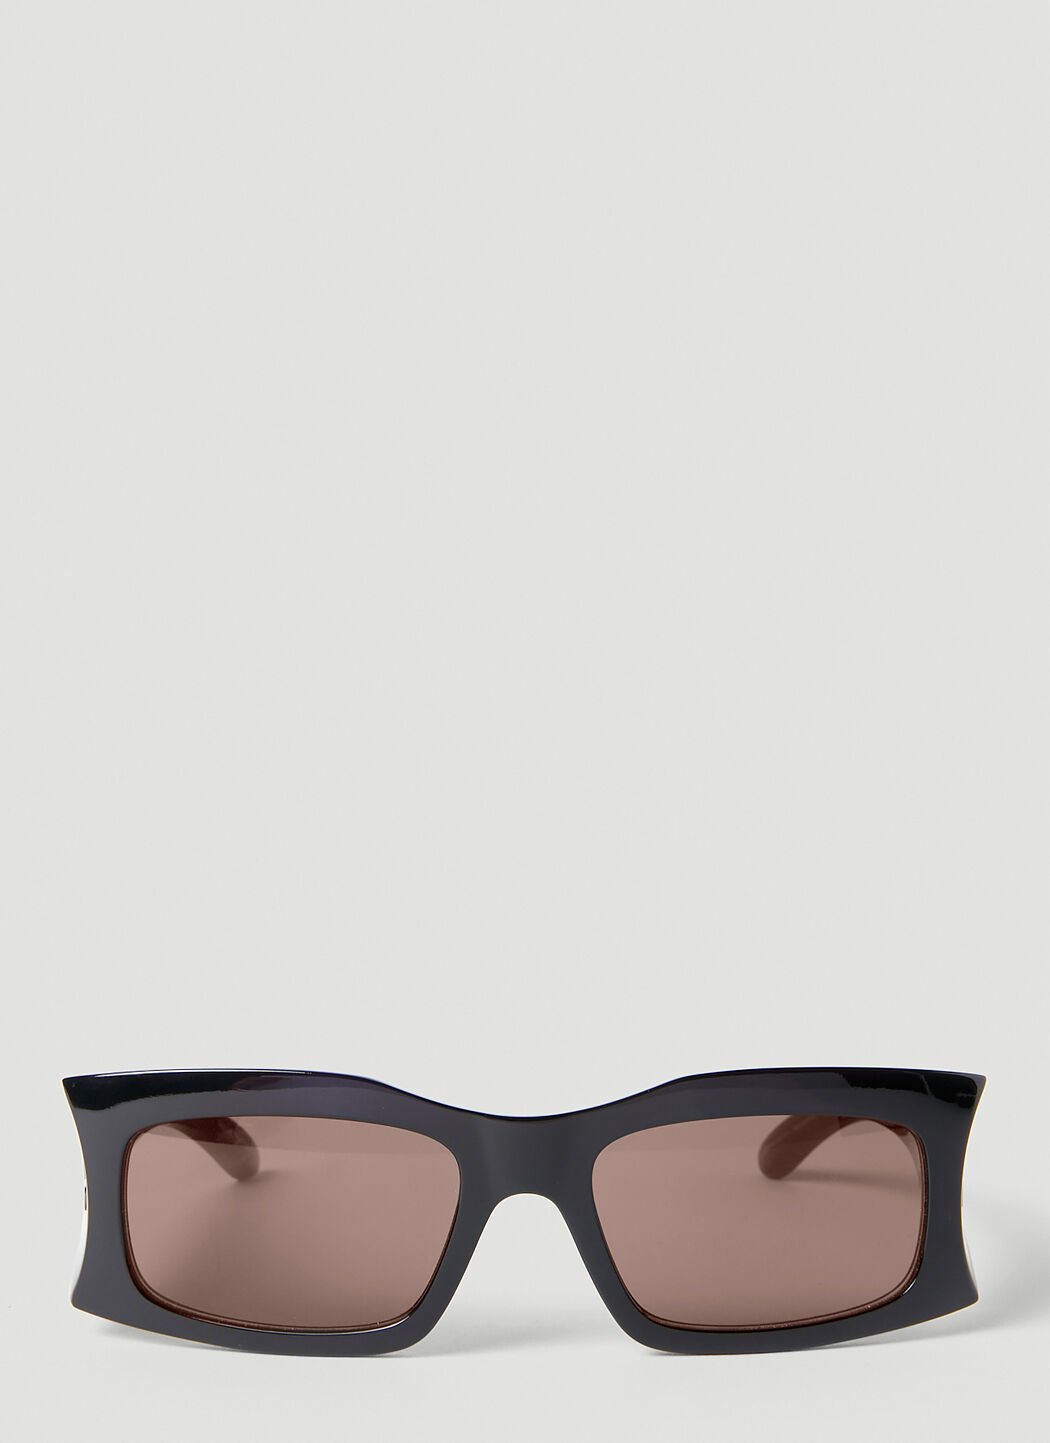 Balenciaga Hourglass Rectangle Sunglasses Black bcs0153001